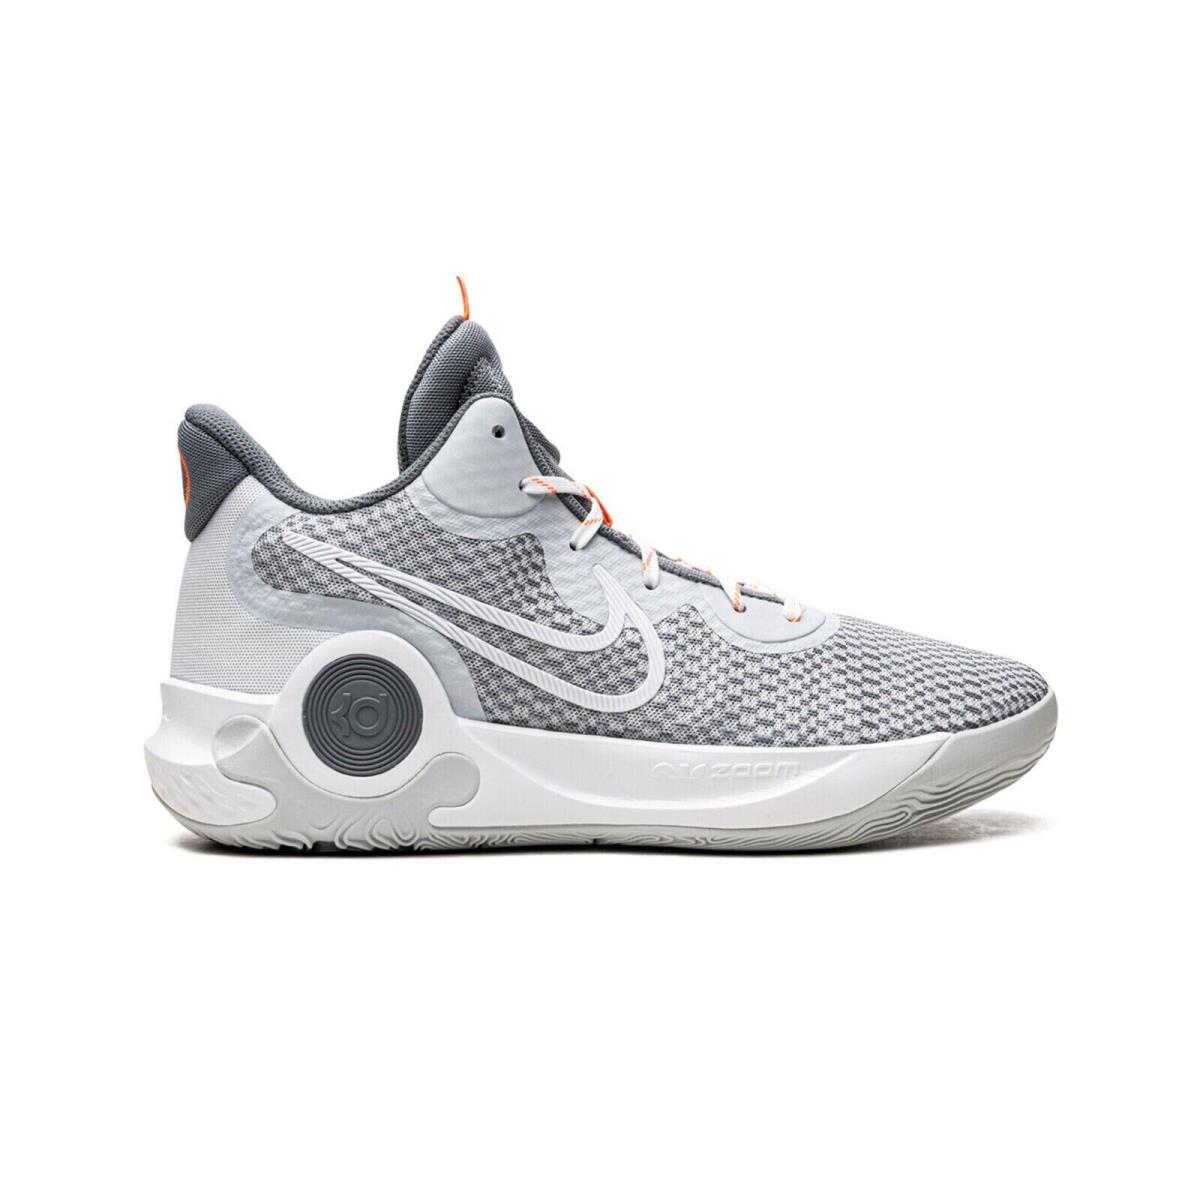 Nike Mens KD Trey 5 IX Basketball Shoes CW3400 011 - PURE PLATIUM /WHITE COOL GREY